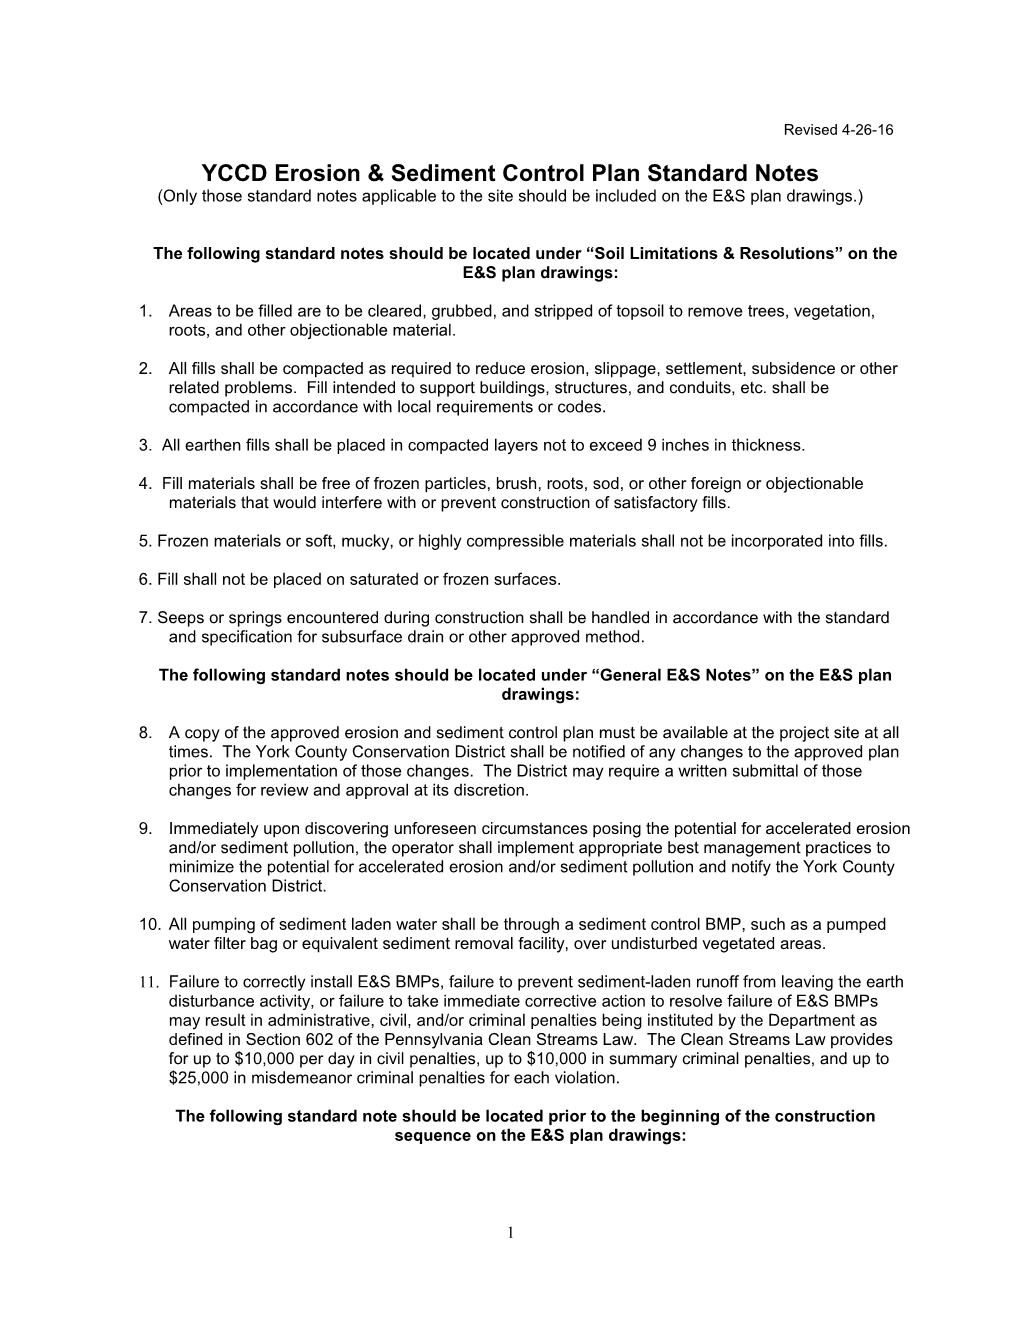 YCCD Erosion & Sediment Control Plan Notes Last Revised 09/19/2006